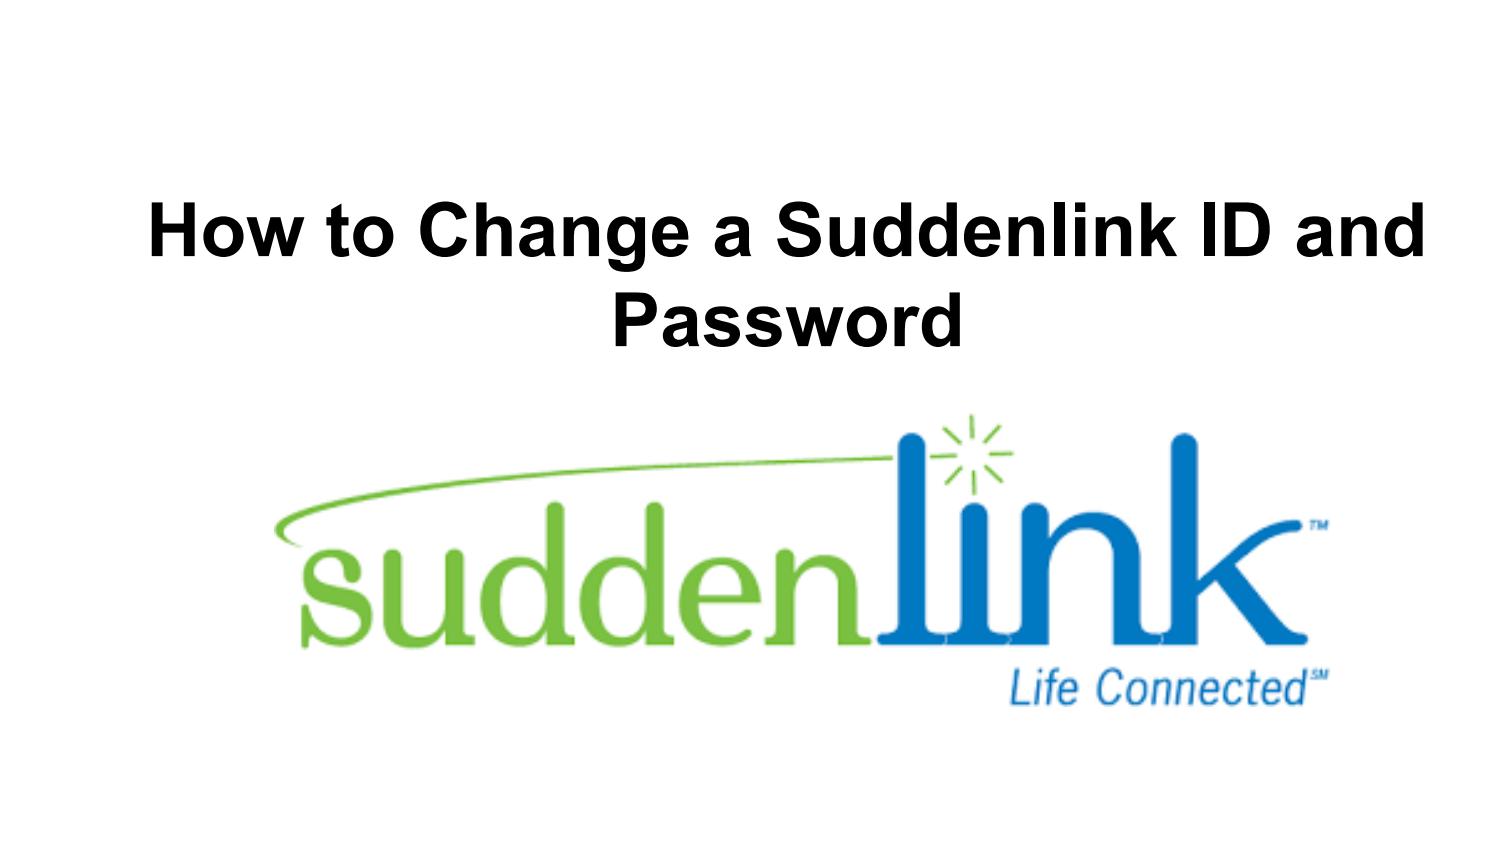 How do I change my Suddenlink Password?